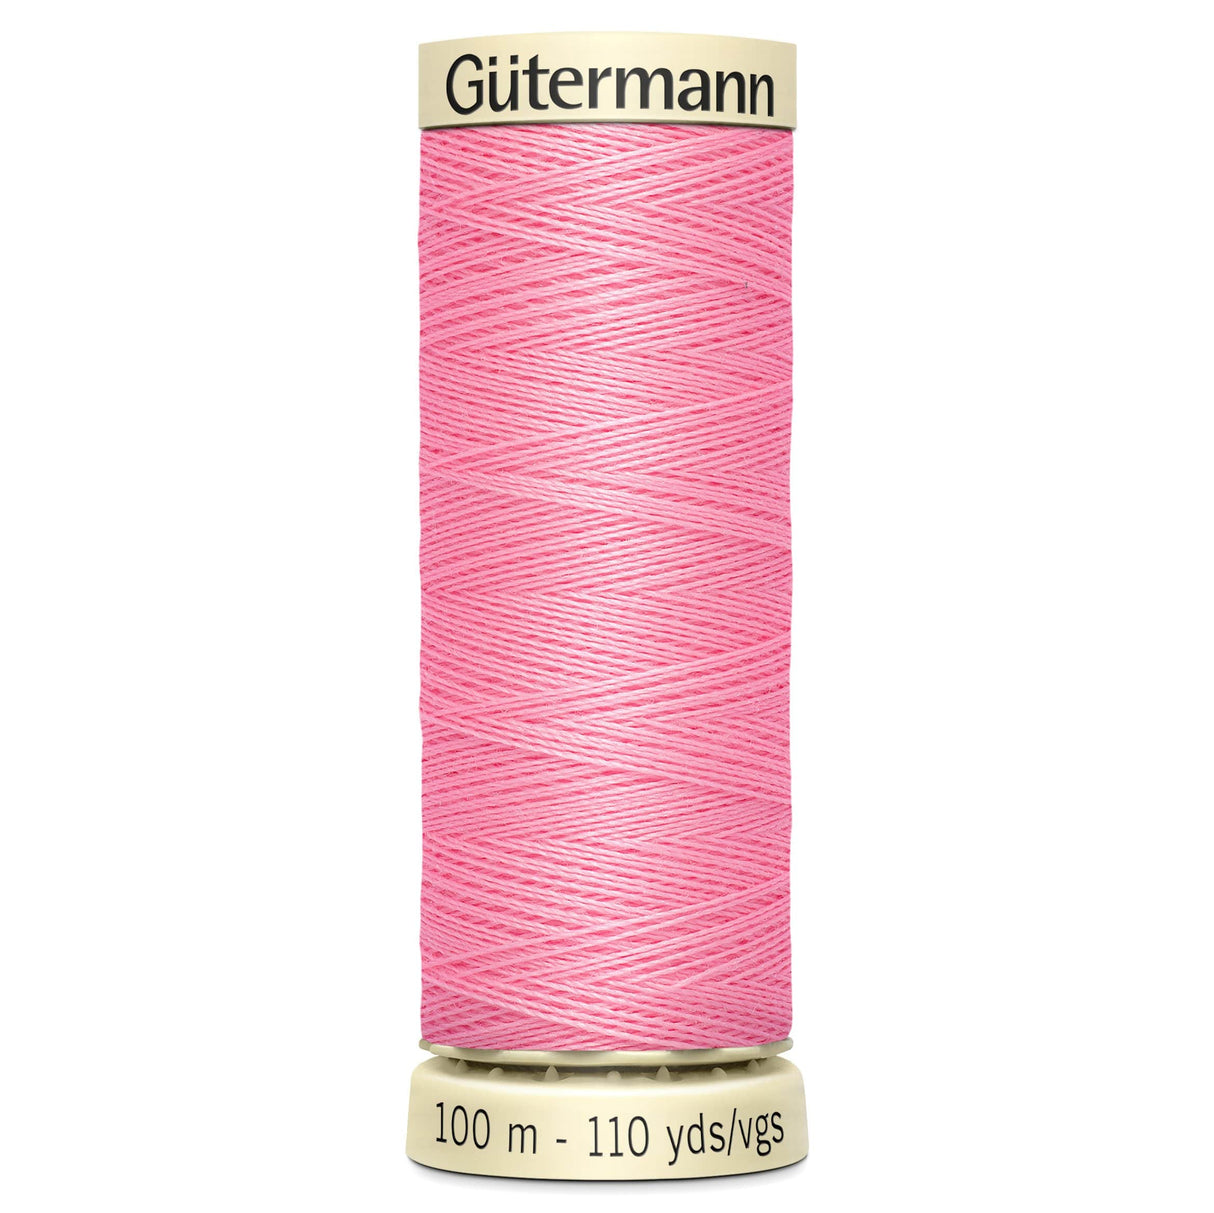 Groves Haberdashery 758 Gutermann Thread Sewing Cotton 100 m Black to Pink